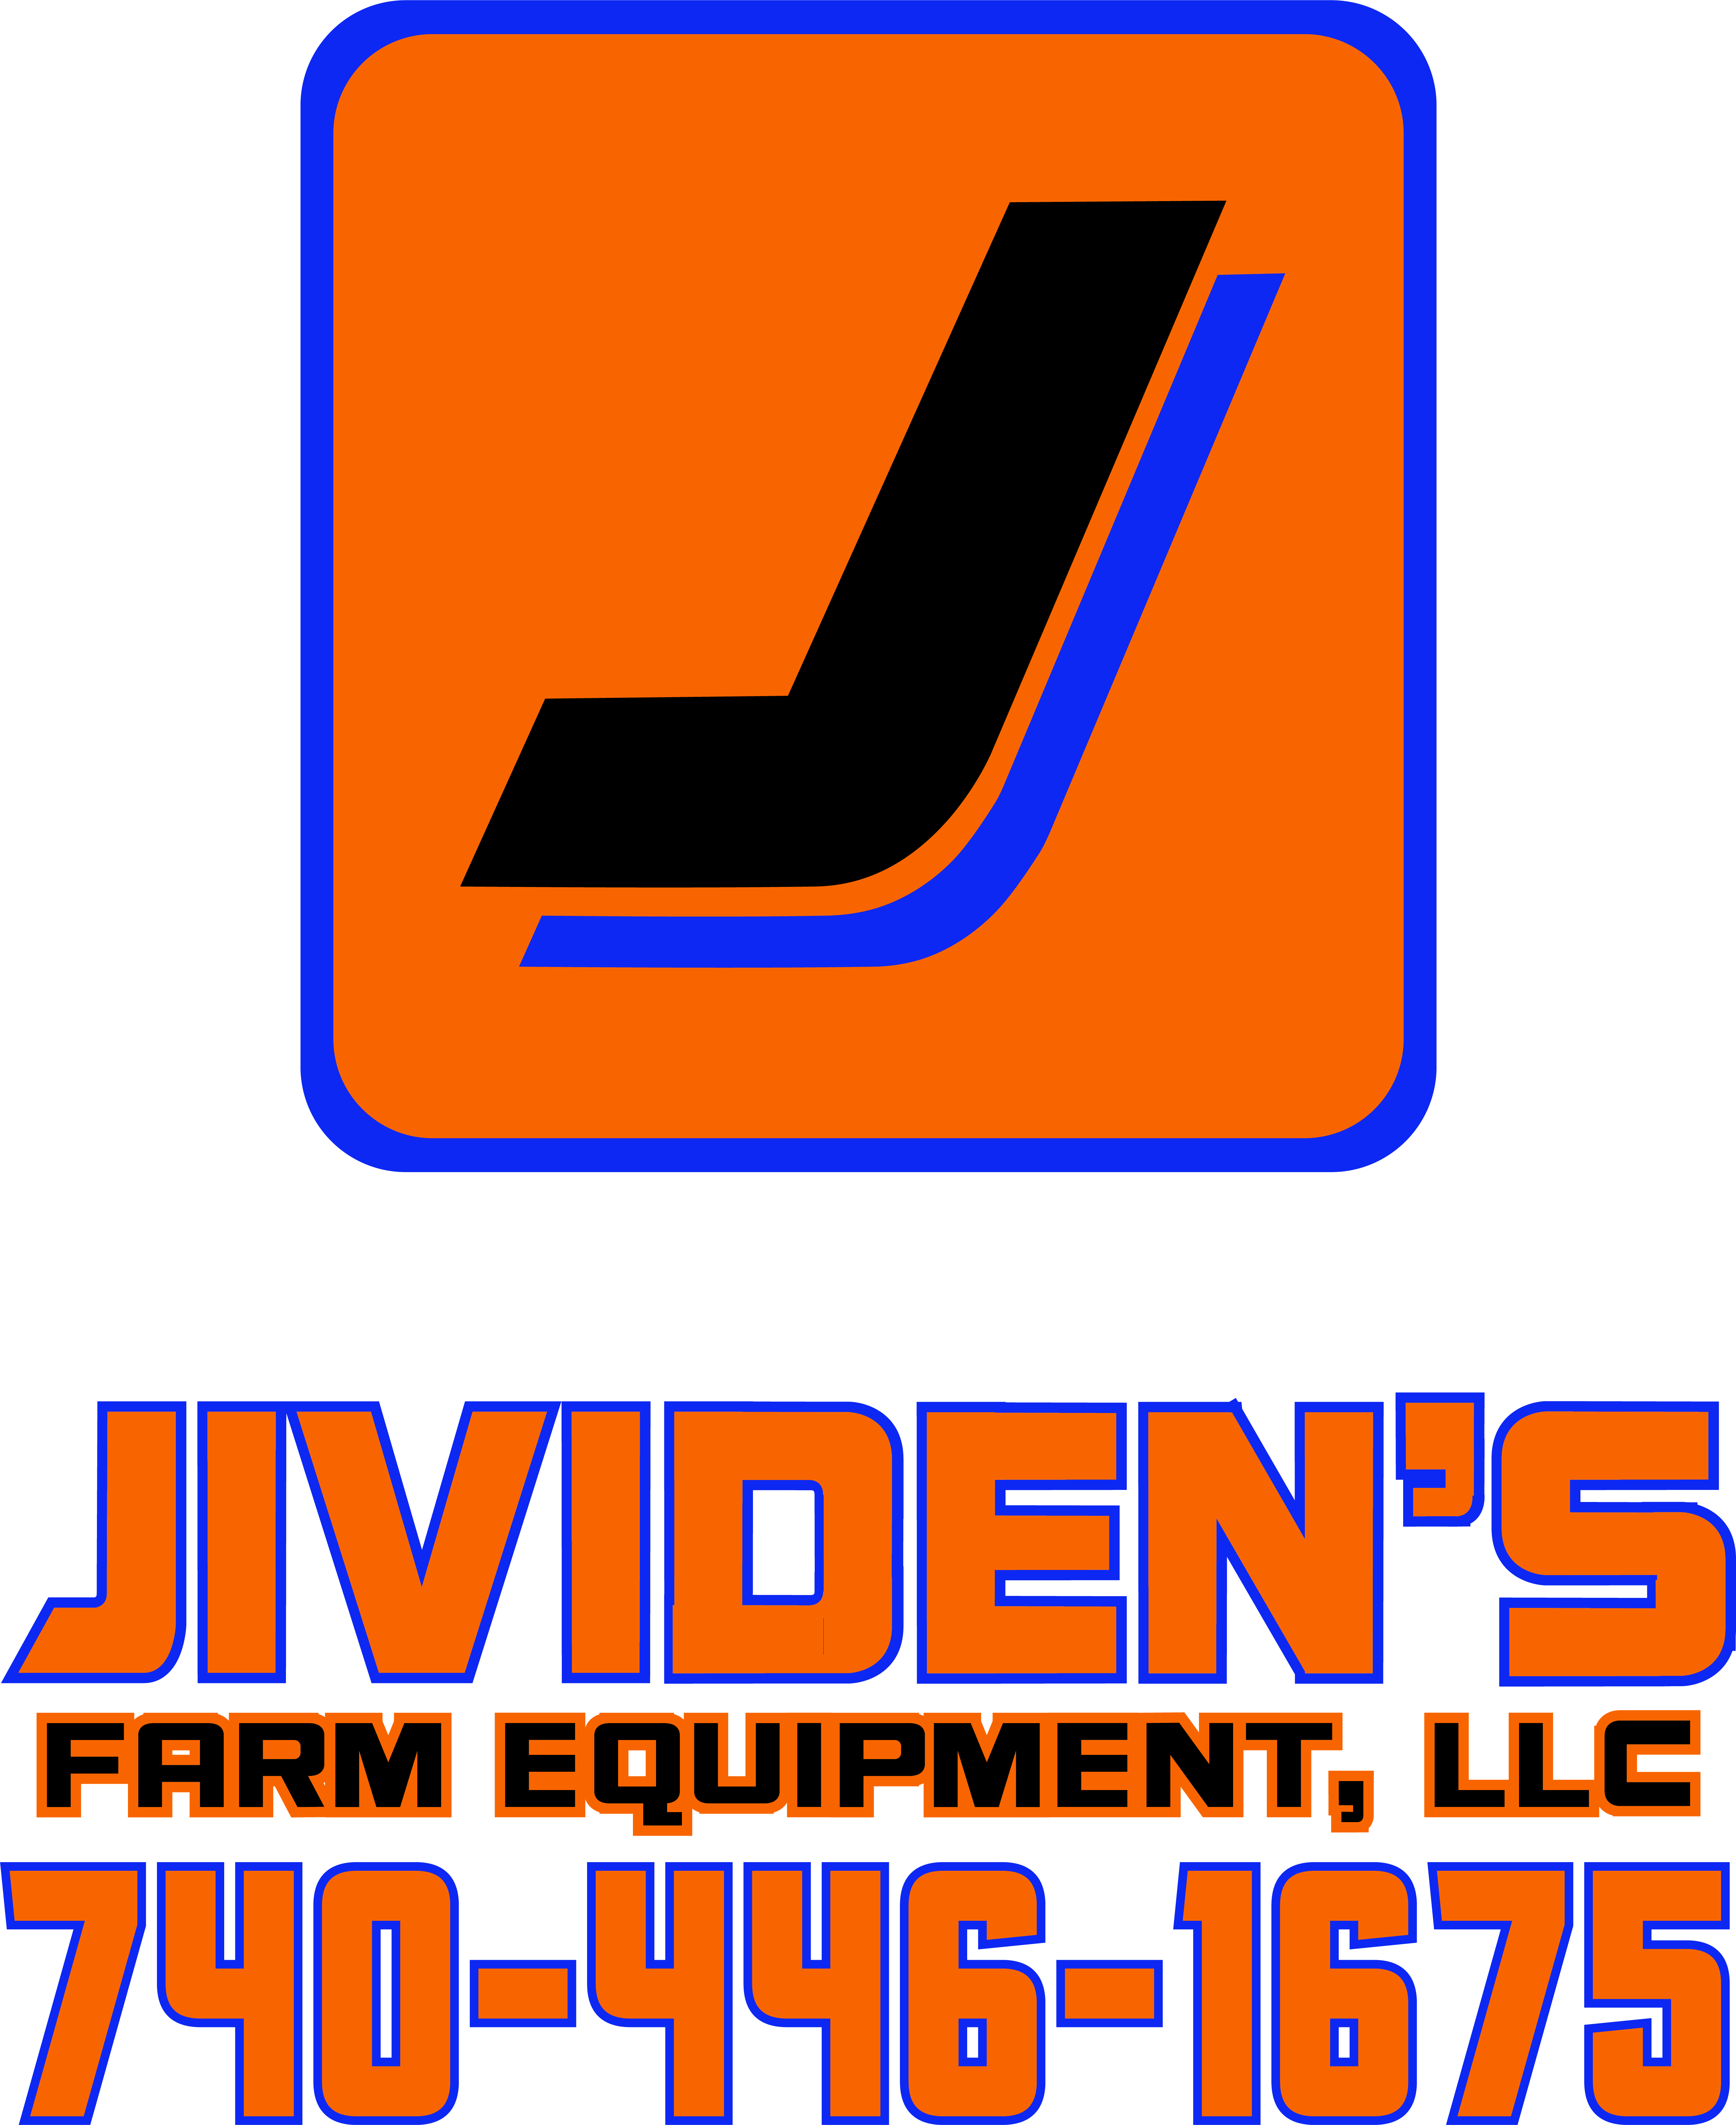 Jividen's